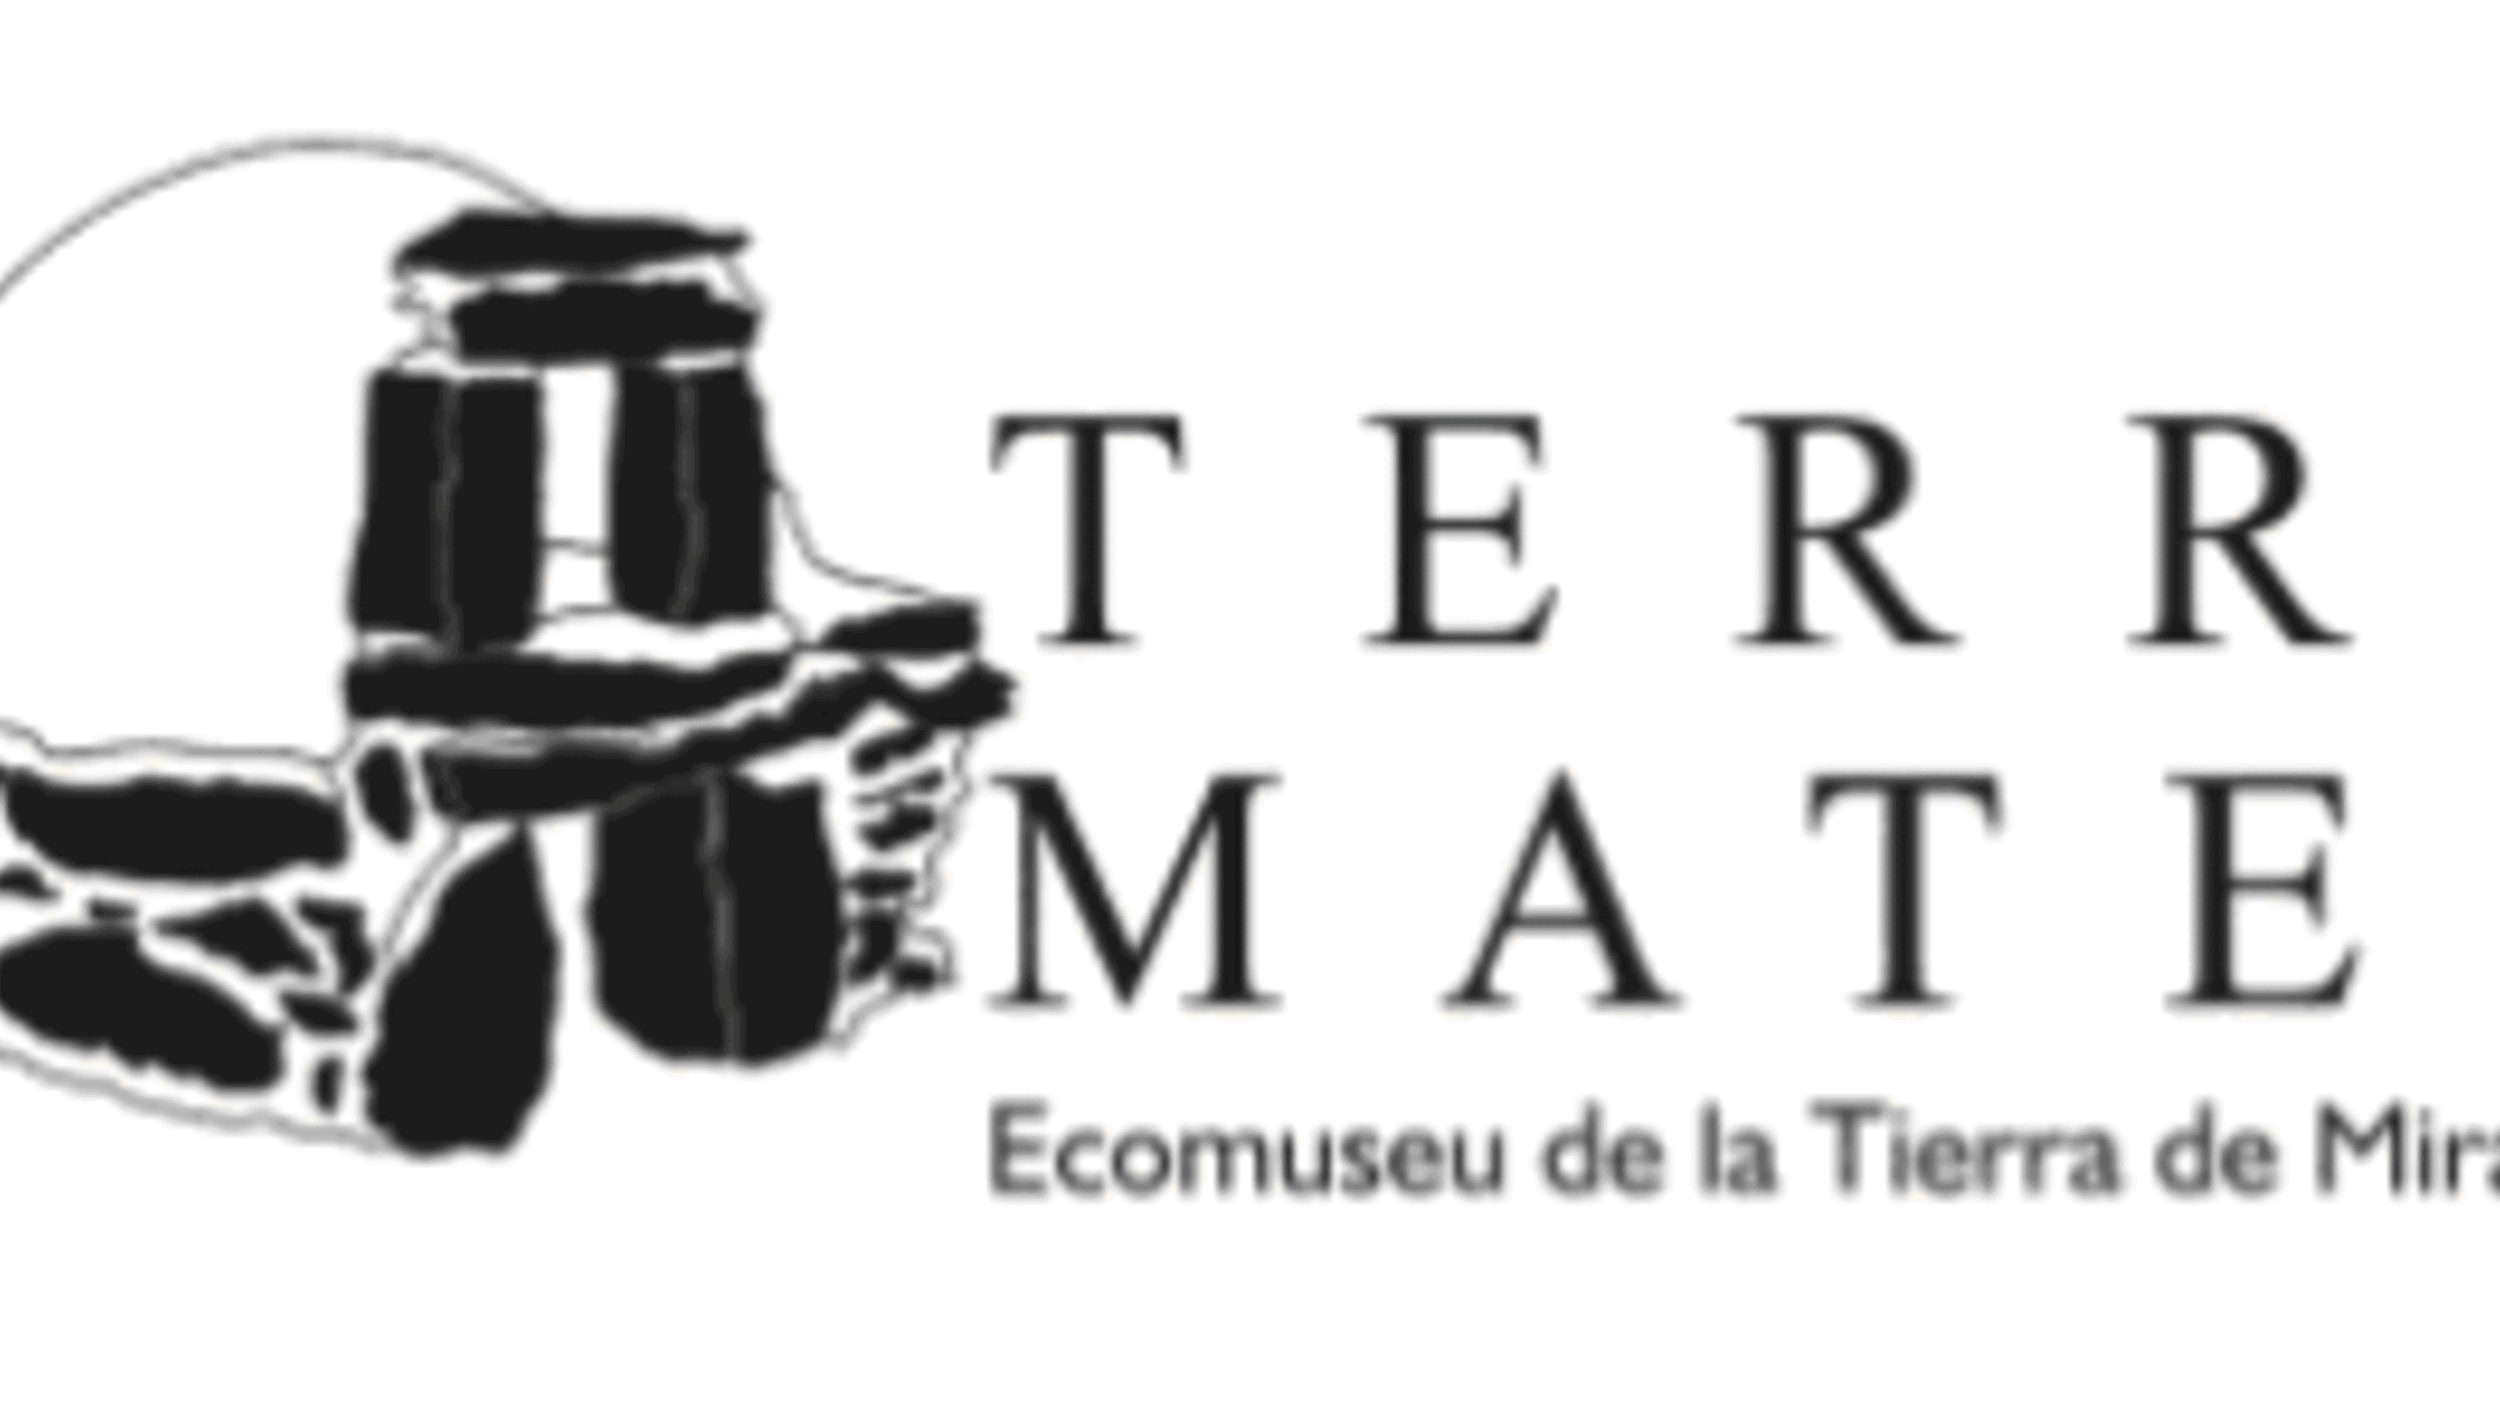 Ecomuseu da Terra de Miranda - Terra Mater